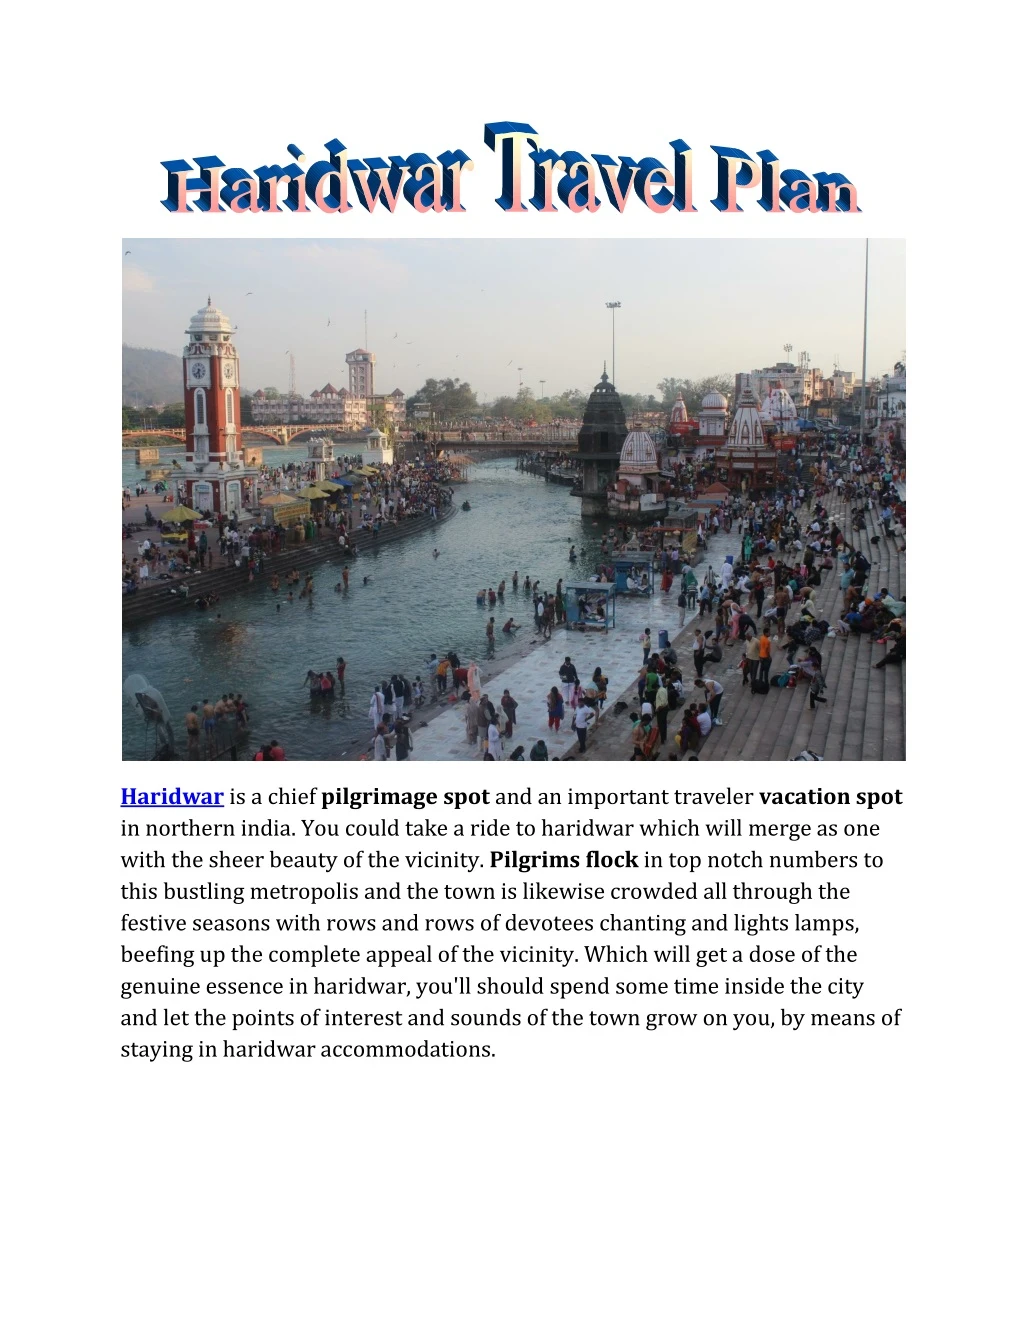 haridwar is a chief pilgrimage spot